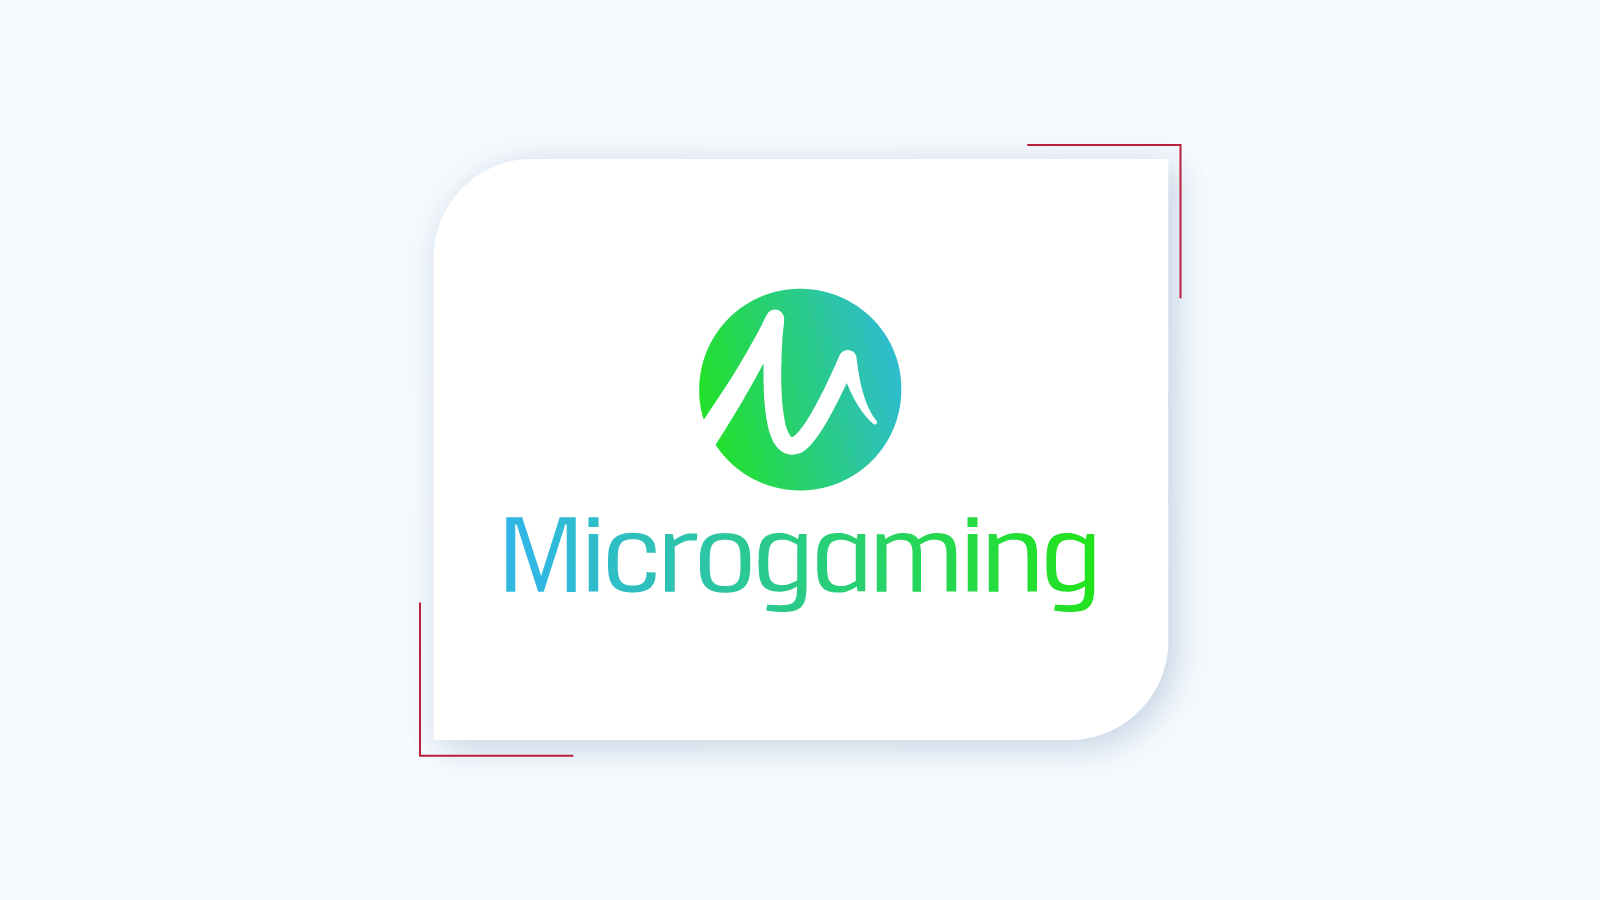 Microgaming software powers Casino Rewards